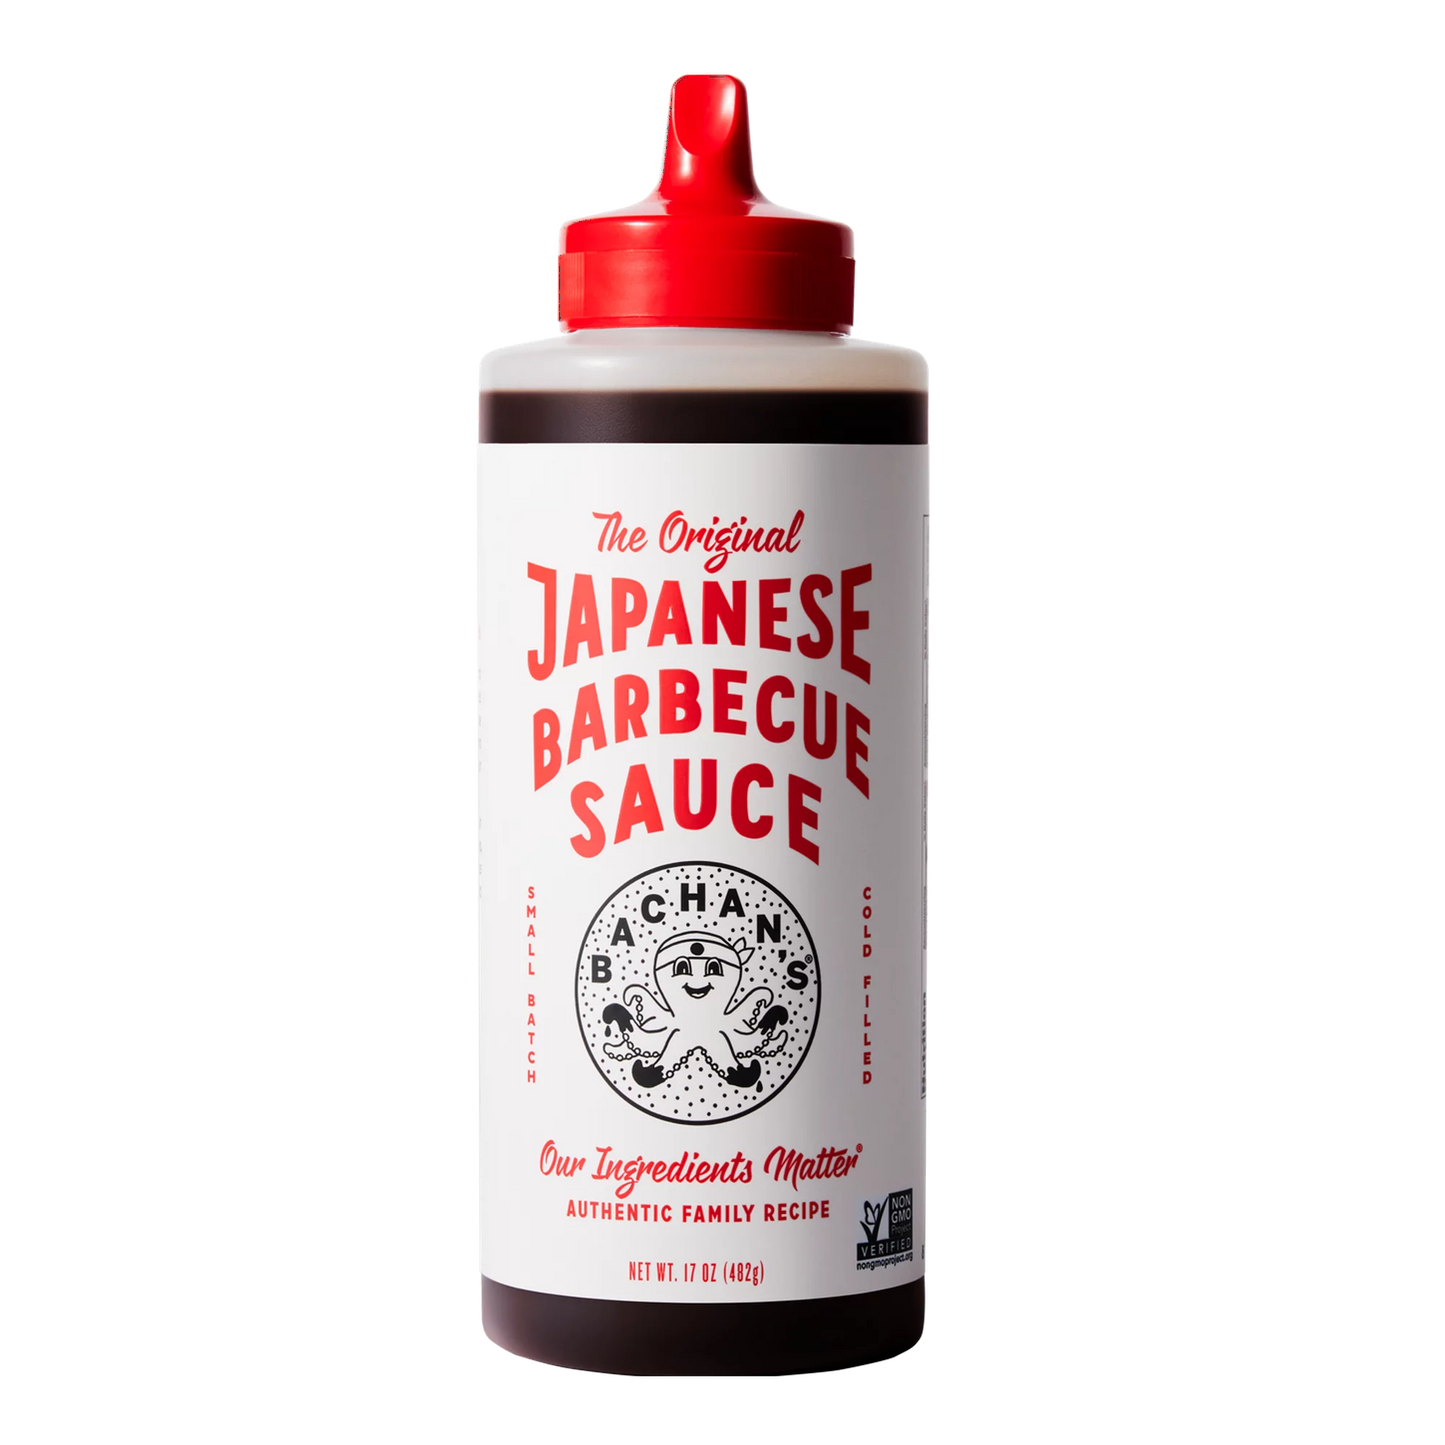 Bachan's Japanese Barbecue Sauce, The Original, 17 oz Bottle